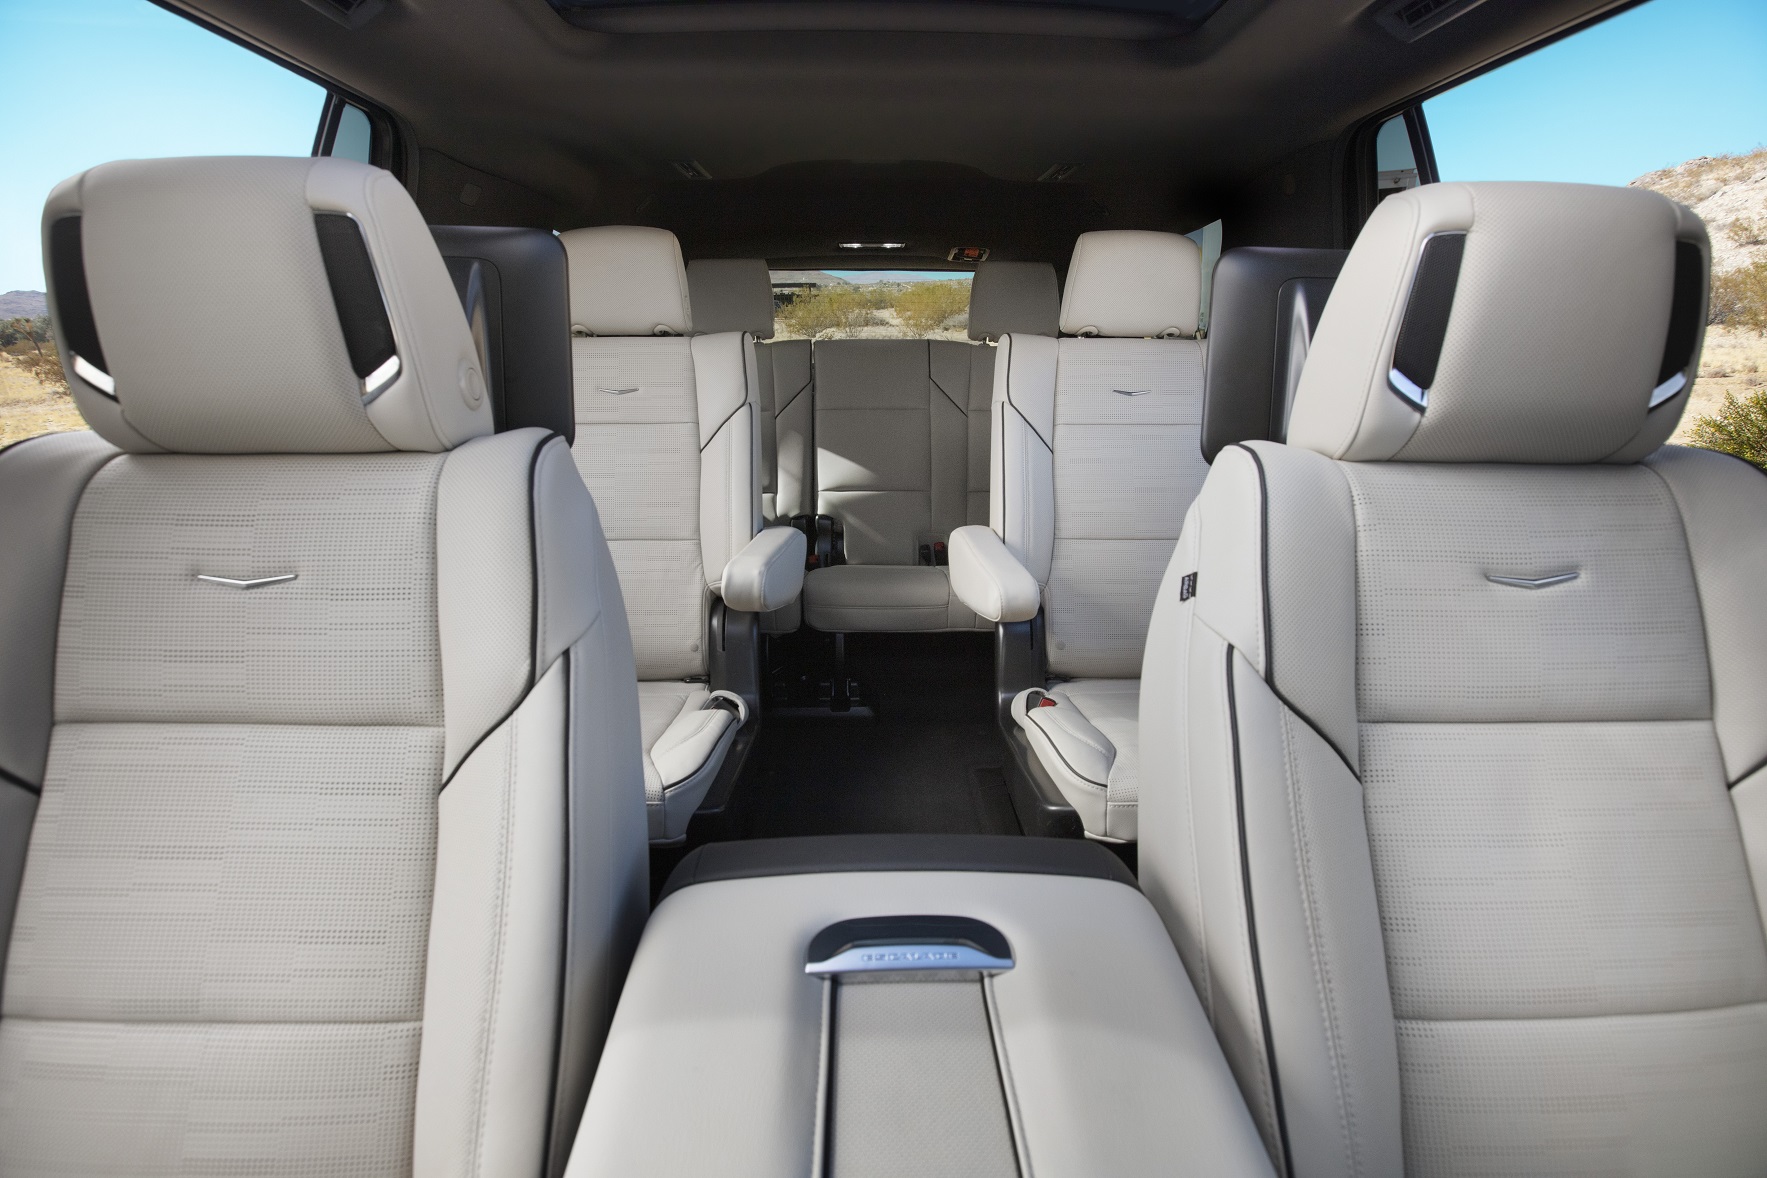 2021-Cadillac-Escalade-interior inset.jpg